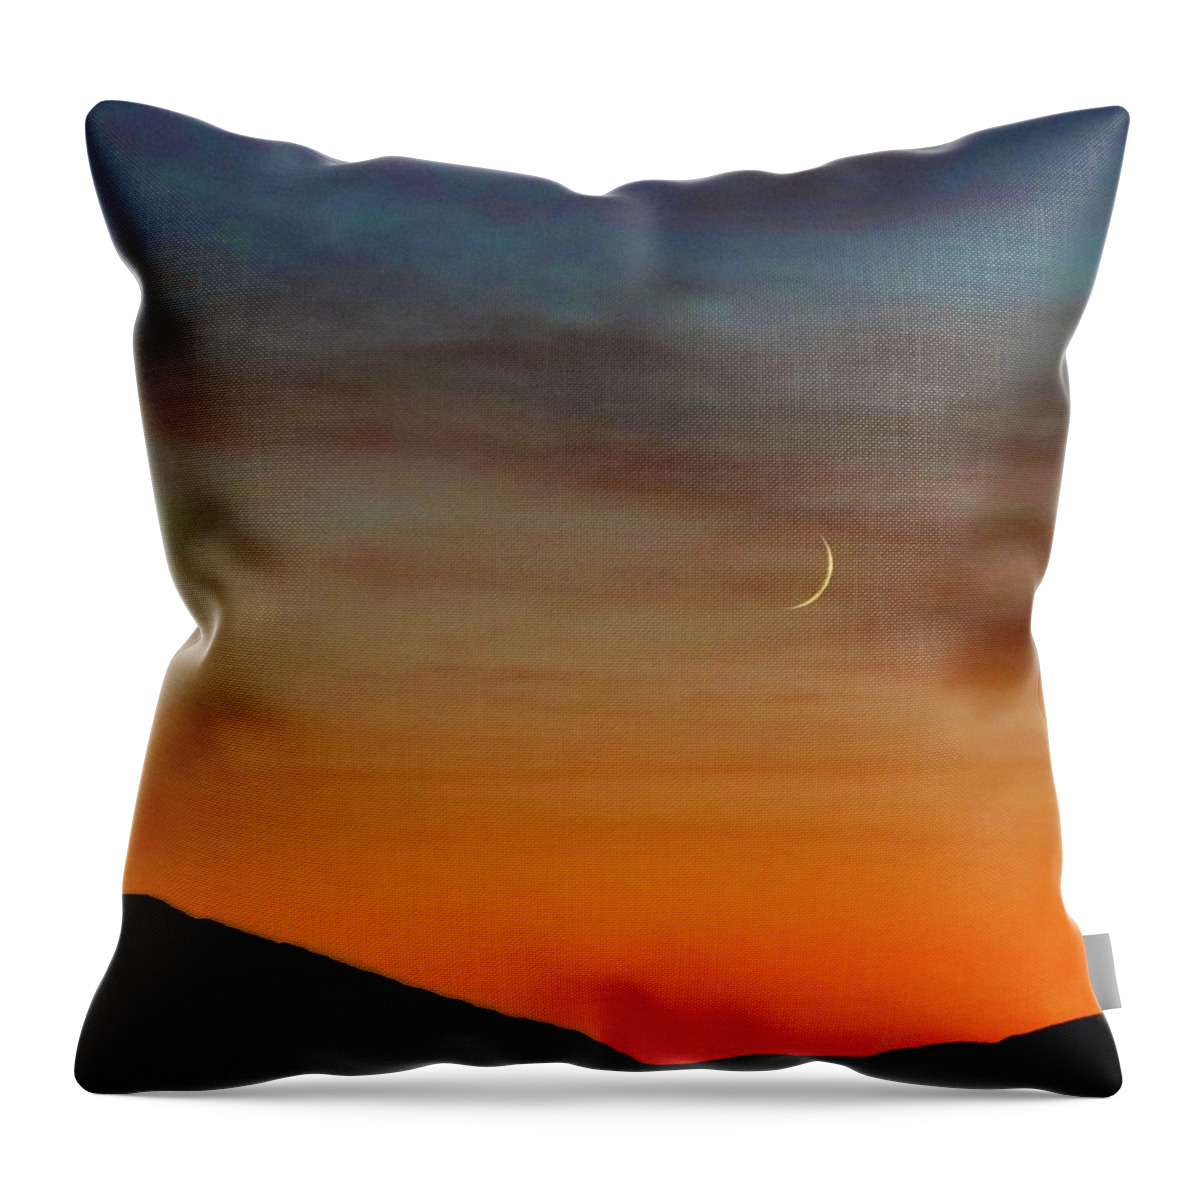 Moon Throw Pillow featuring the photograph Crescent Moon at Sunset by Sarah Lilja